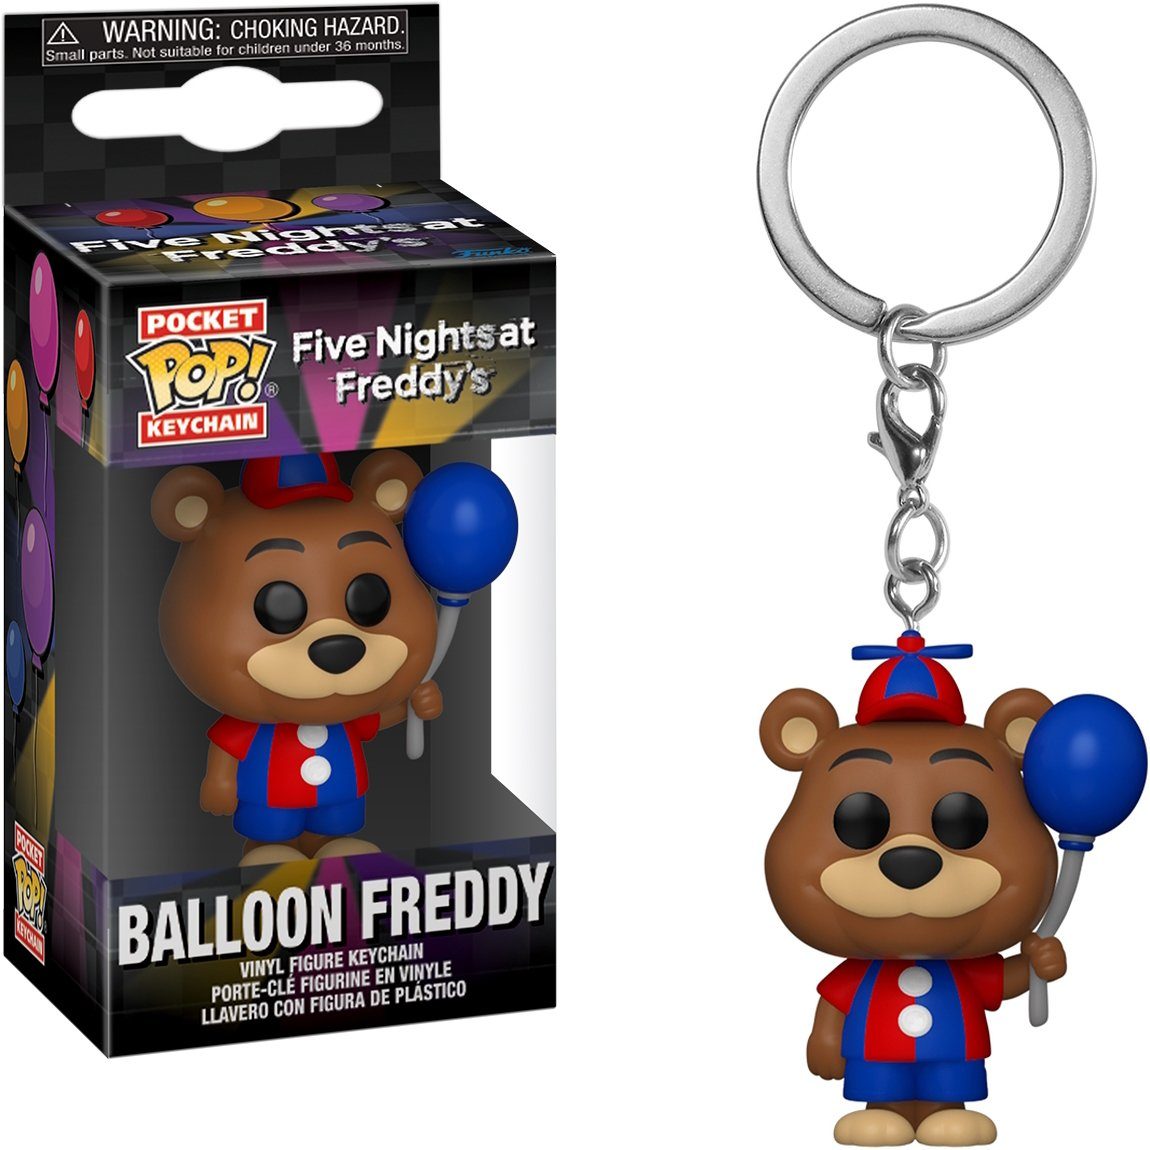 Freddy Pop! at Nights Schlüsselanhänger Five Pocket Balloon Freddy's Funko